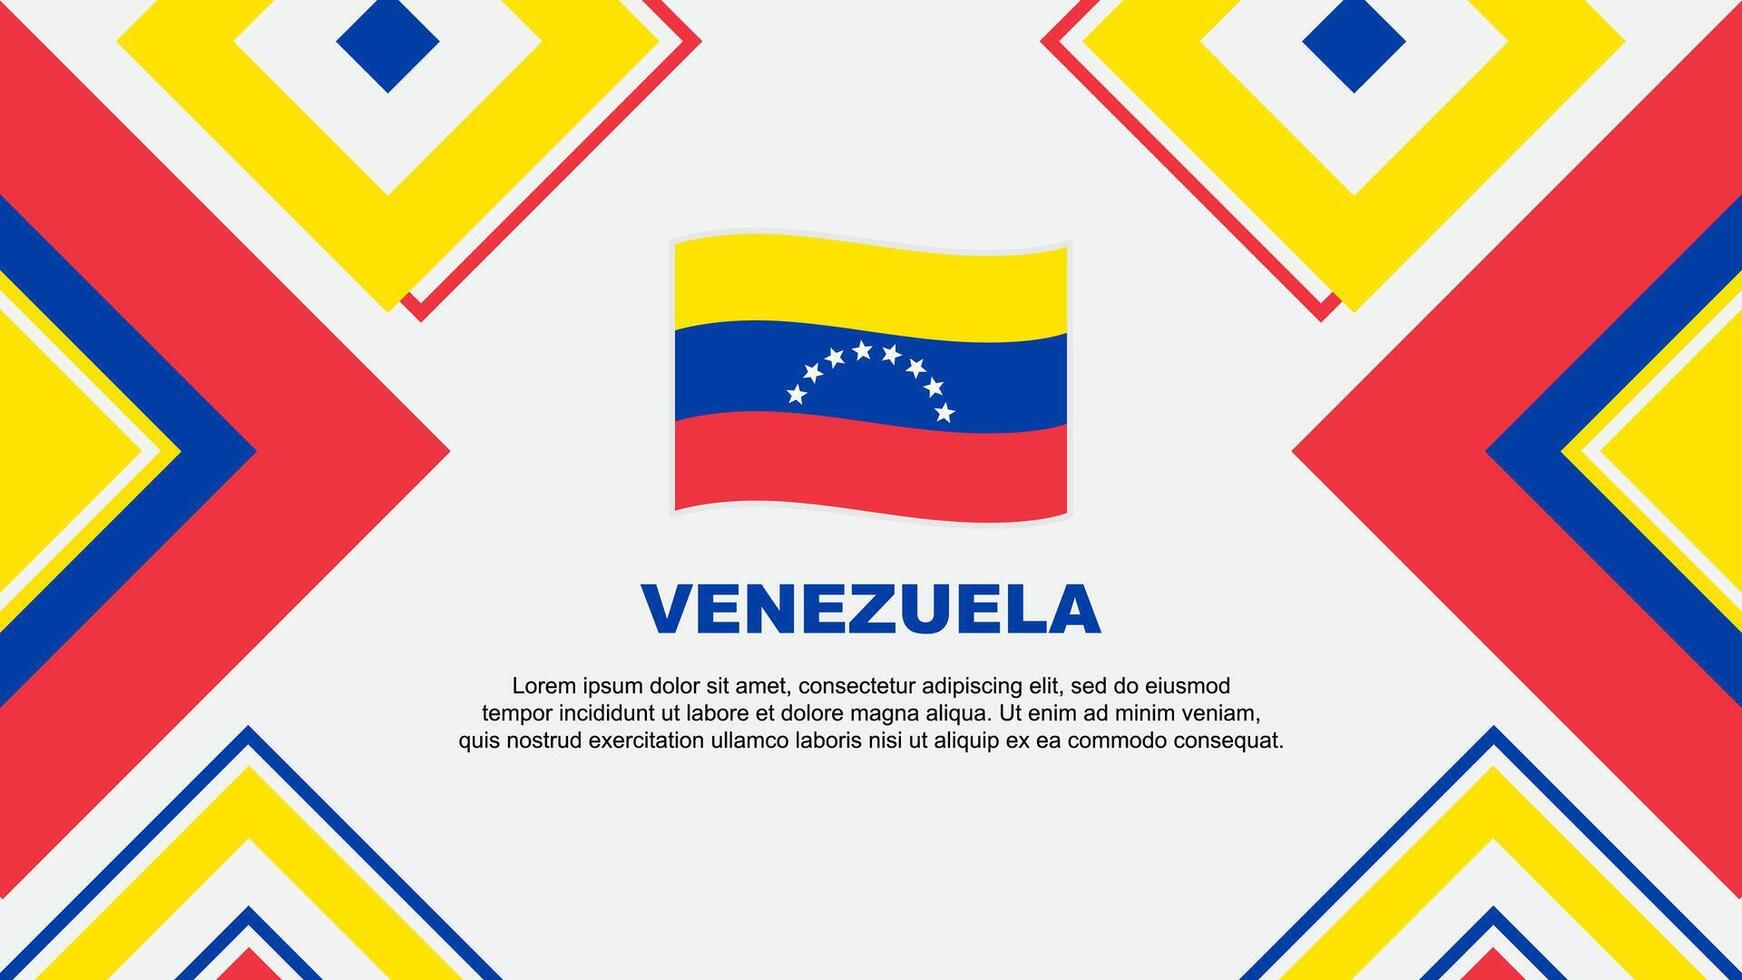 Venezuela Flag Abstract Background Design Template. Venezuela Independence Day Banner Wallpaper Vector Illustration. Venezuela Independence Day